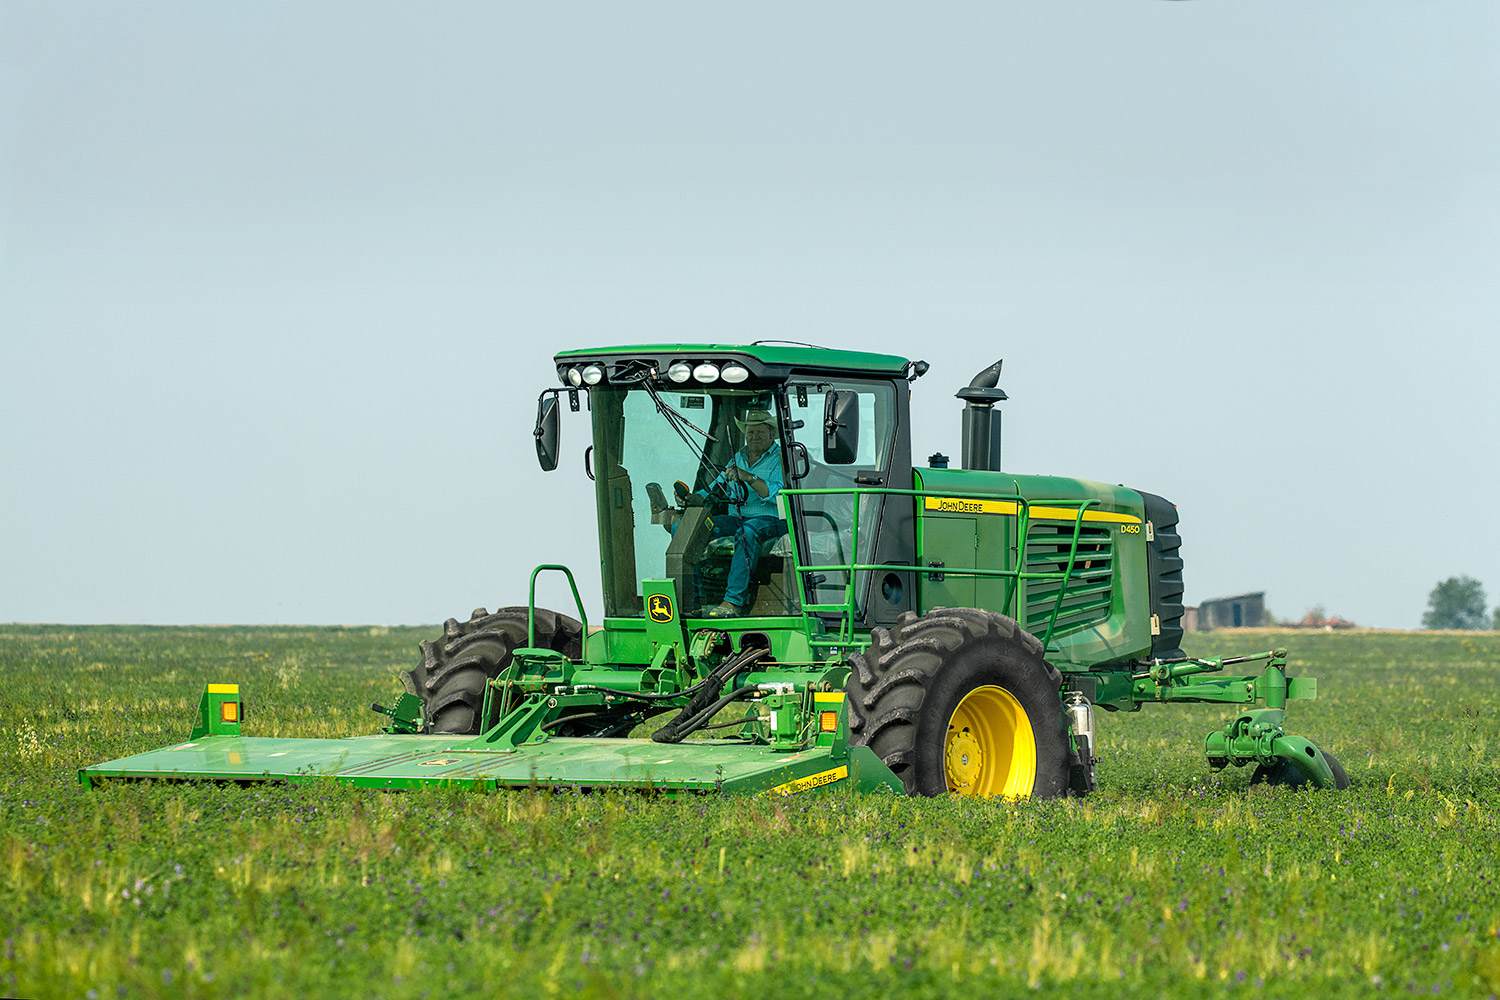 A farmer cuts alfalfa on a farm west of Valier, Montana.&nbsp;→ Buy a Print&nbsp;or License Photo